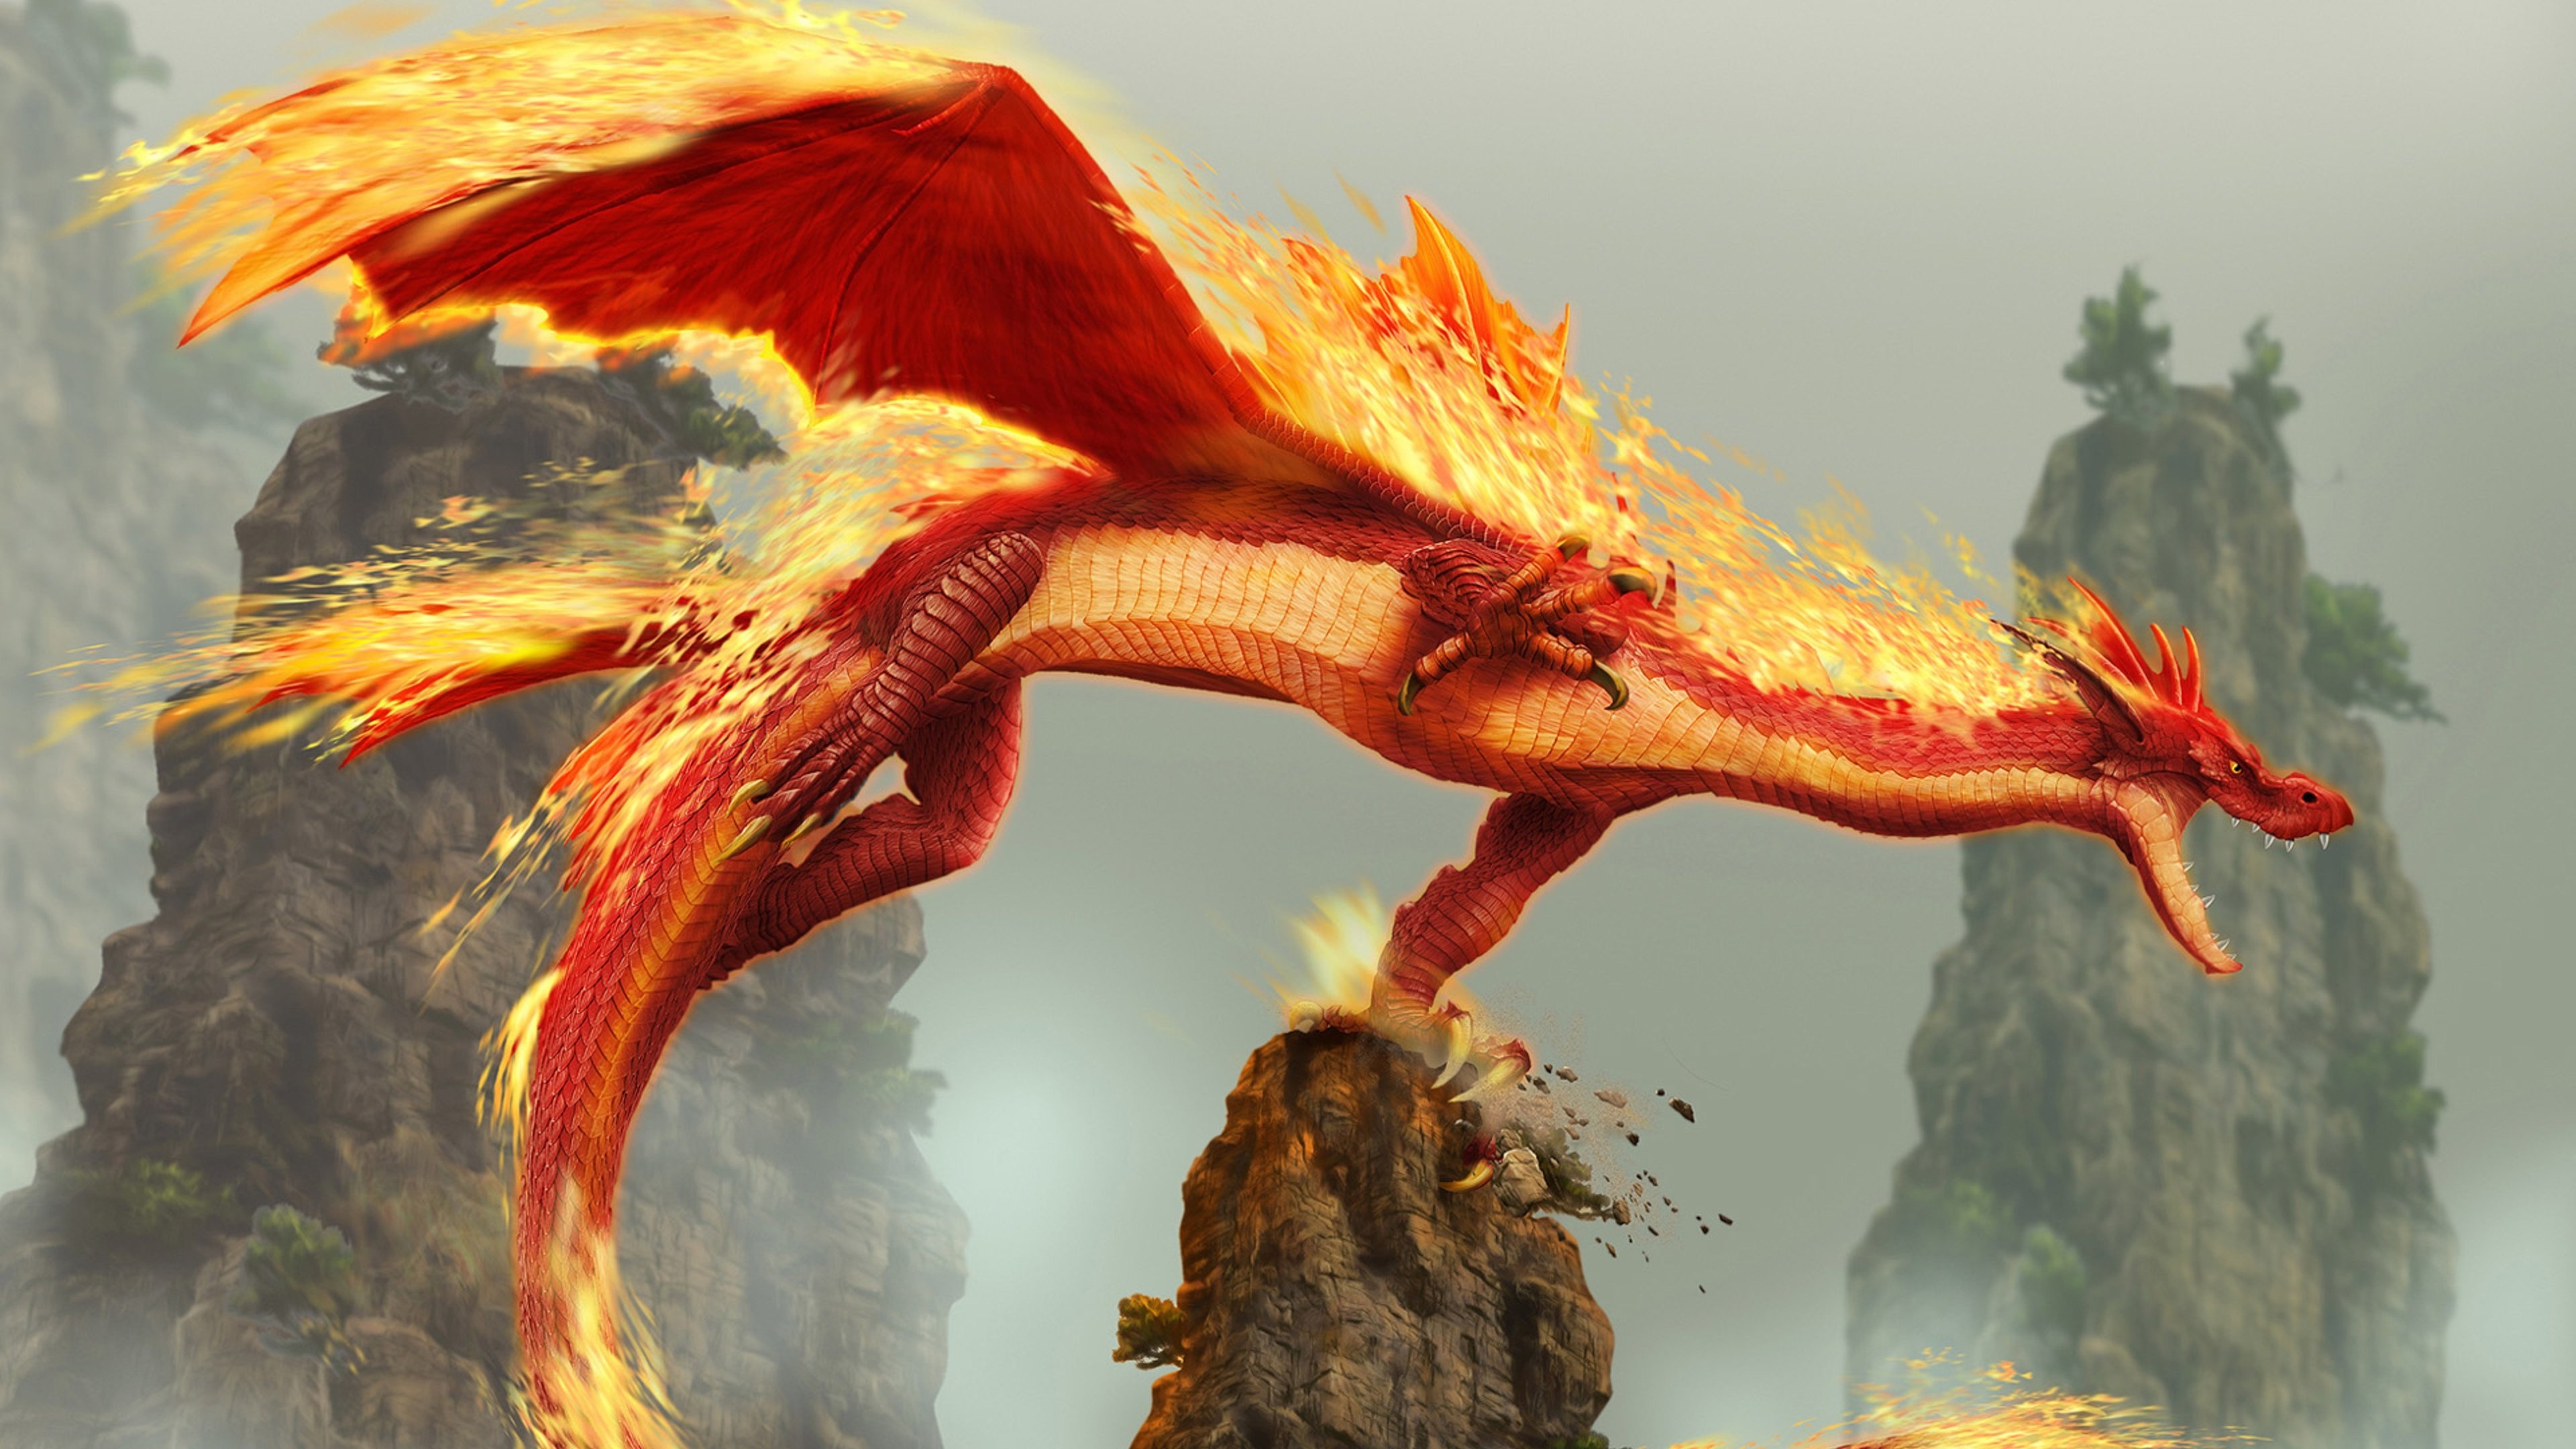 Wallpaper 4k Red Fire Dragon Creature Fantasy Monster 4k Wallpaper